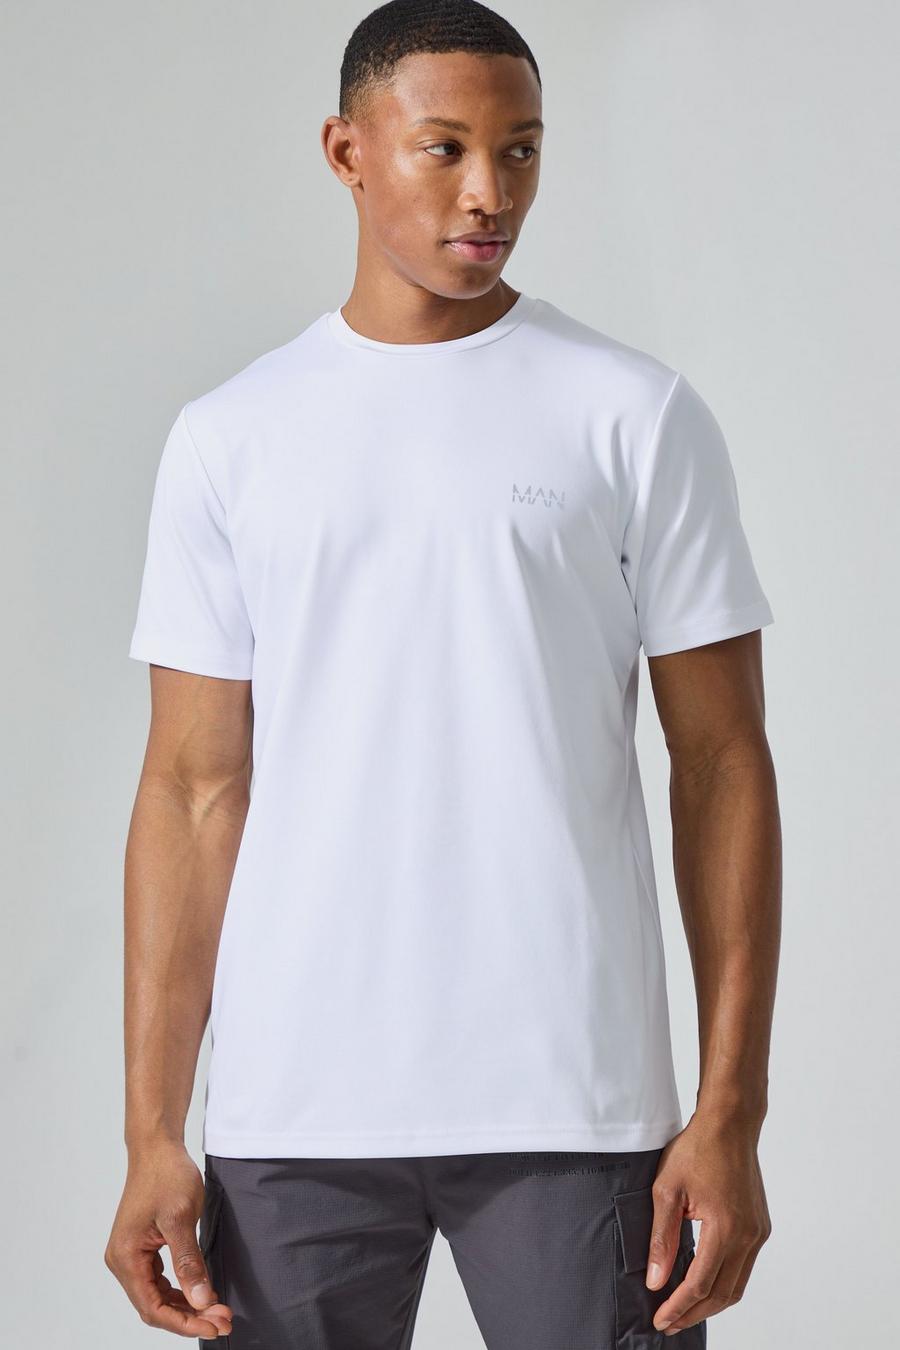 Man Active Performance Sport T-Shirt, White